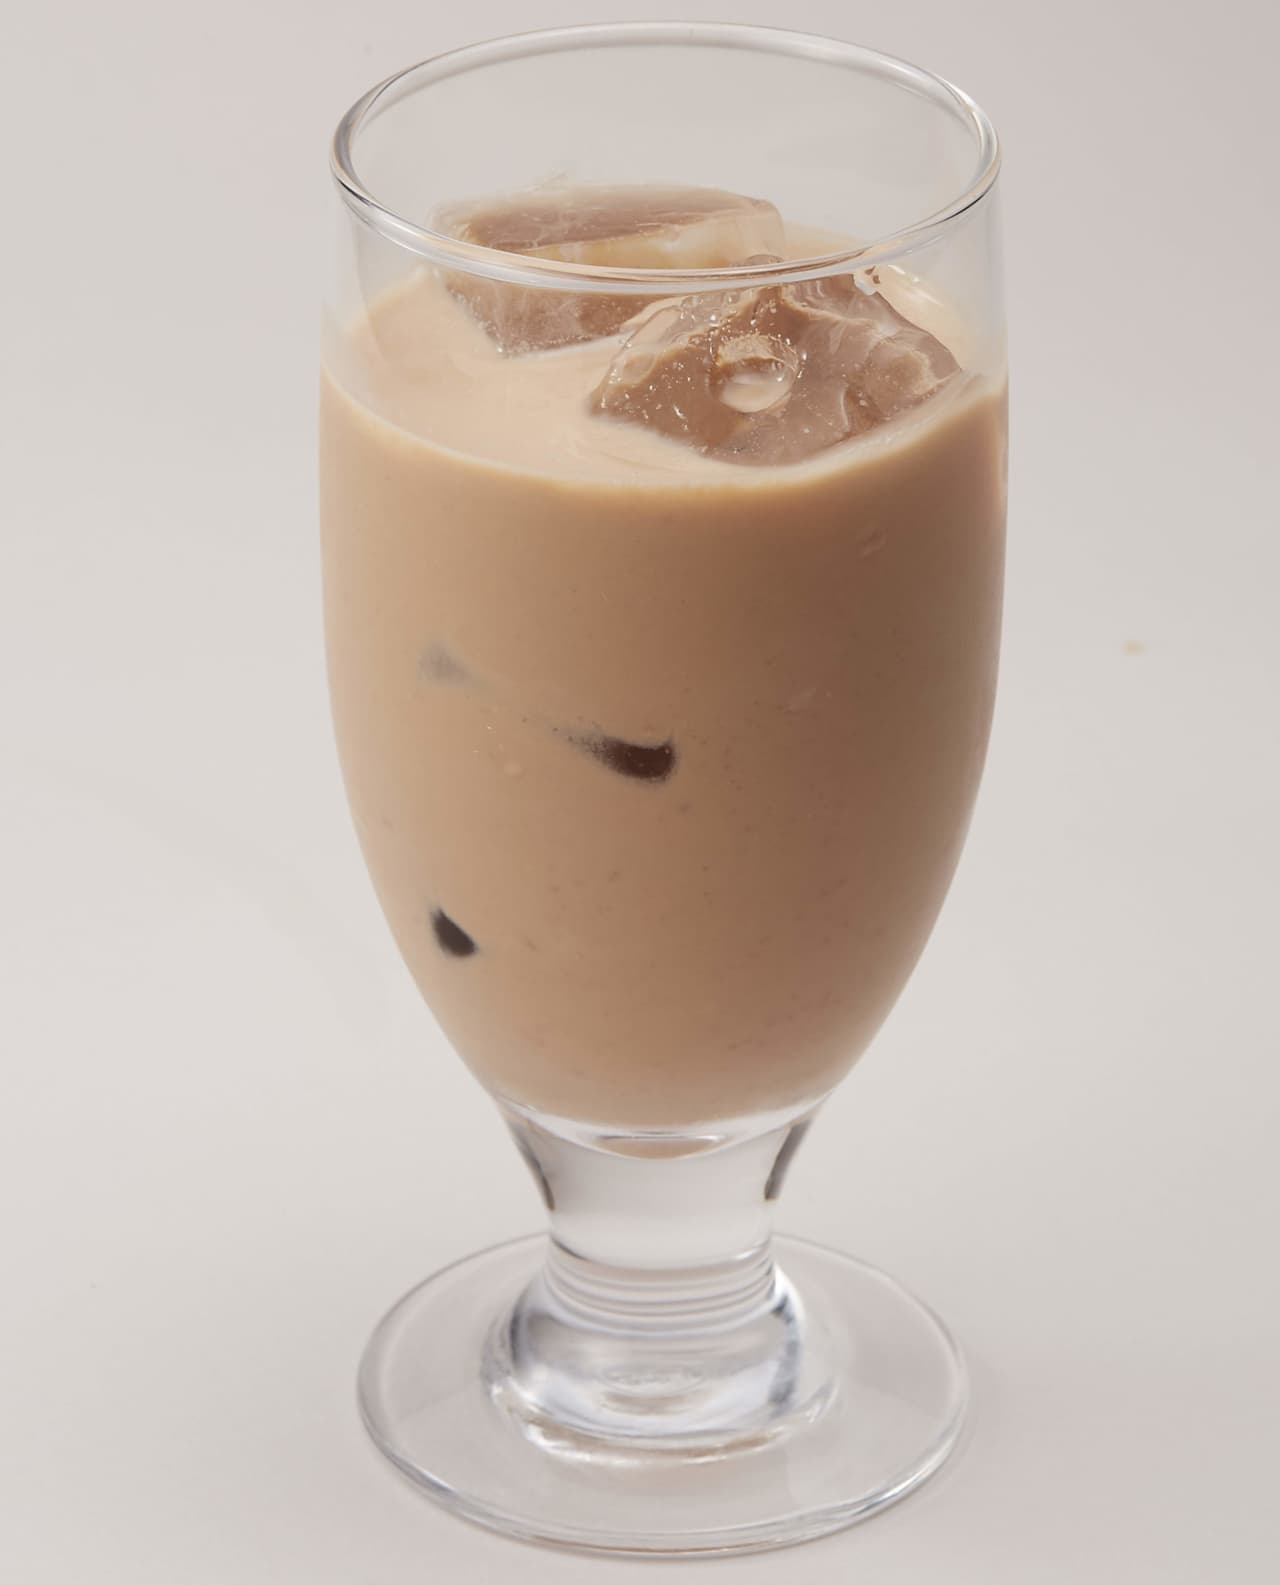 Chocolate drink float (using Shiroi Koibito chocolate drink)